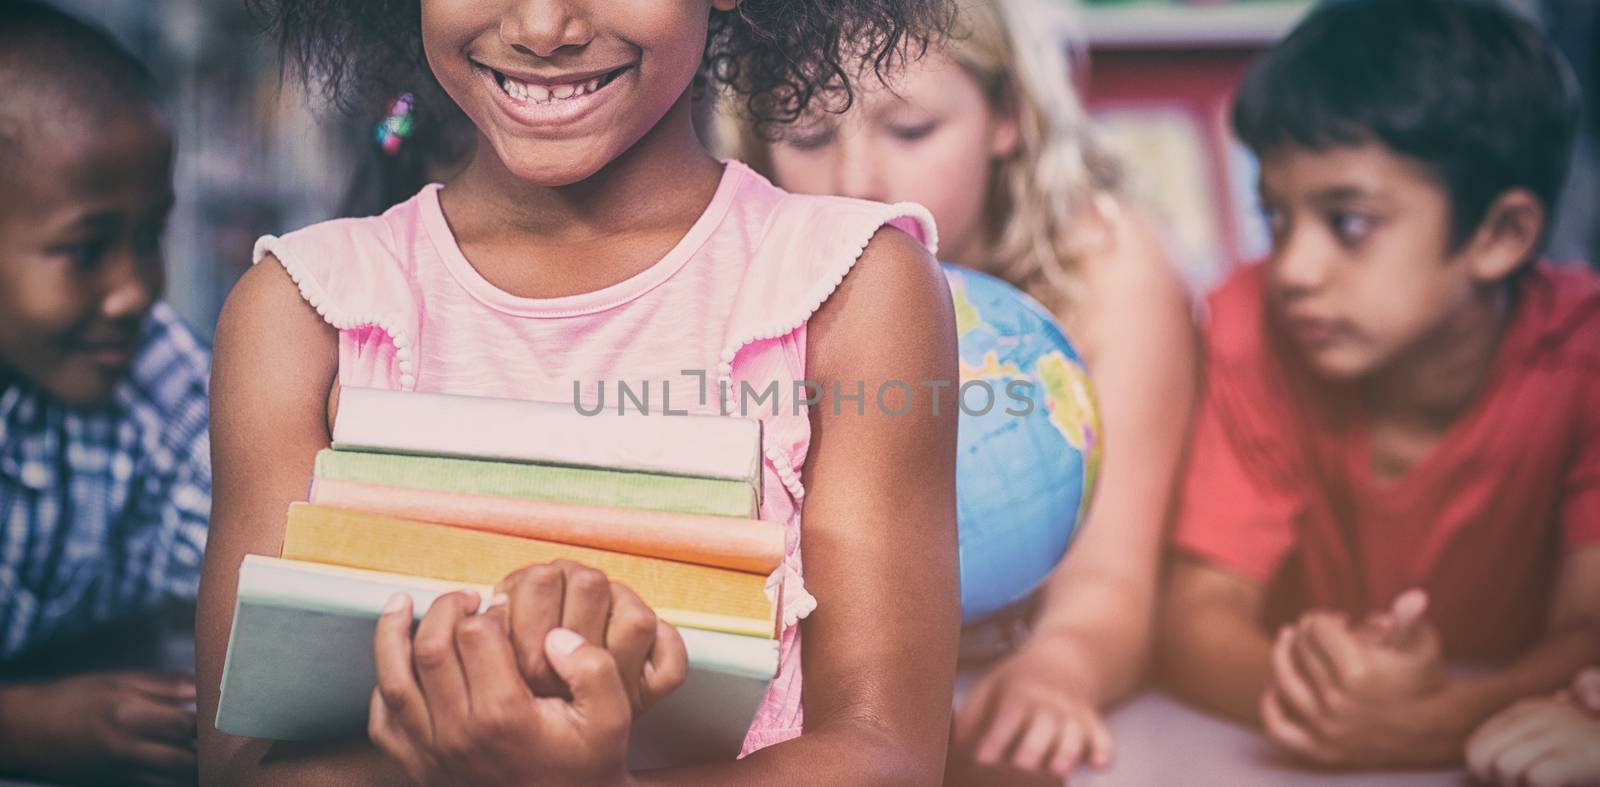 Smiling girl holding books against classmates by Wavebreakmedia